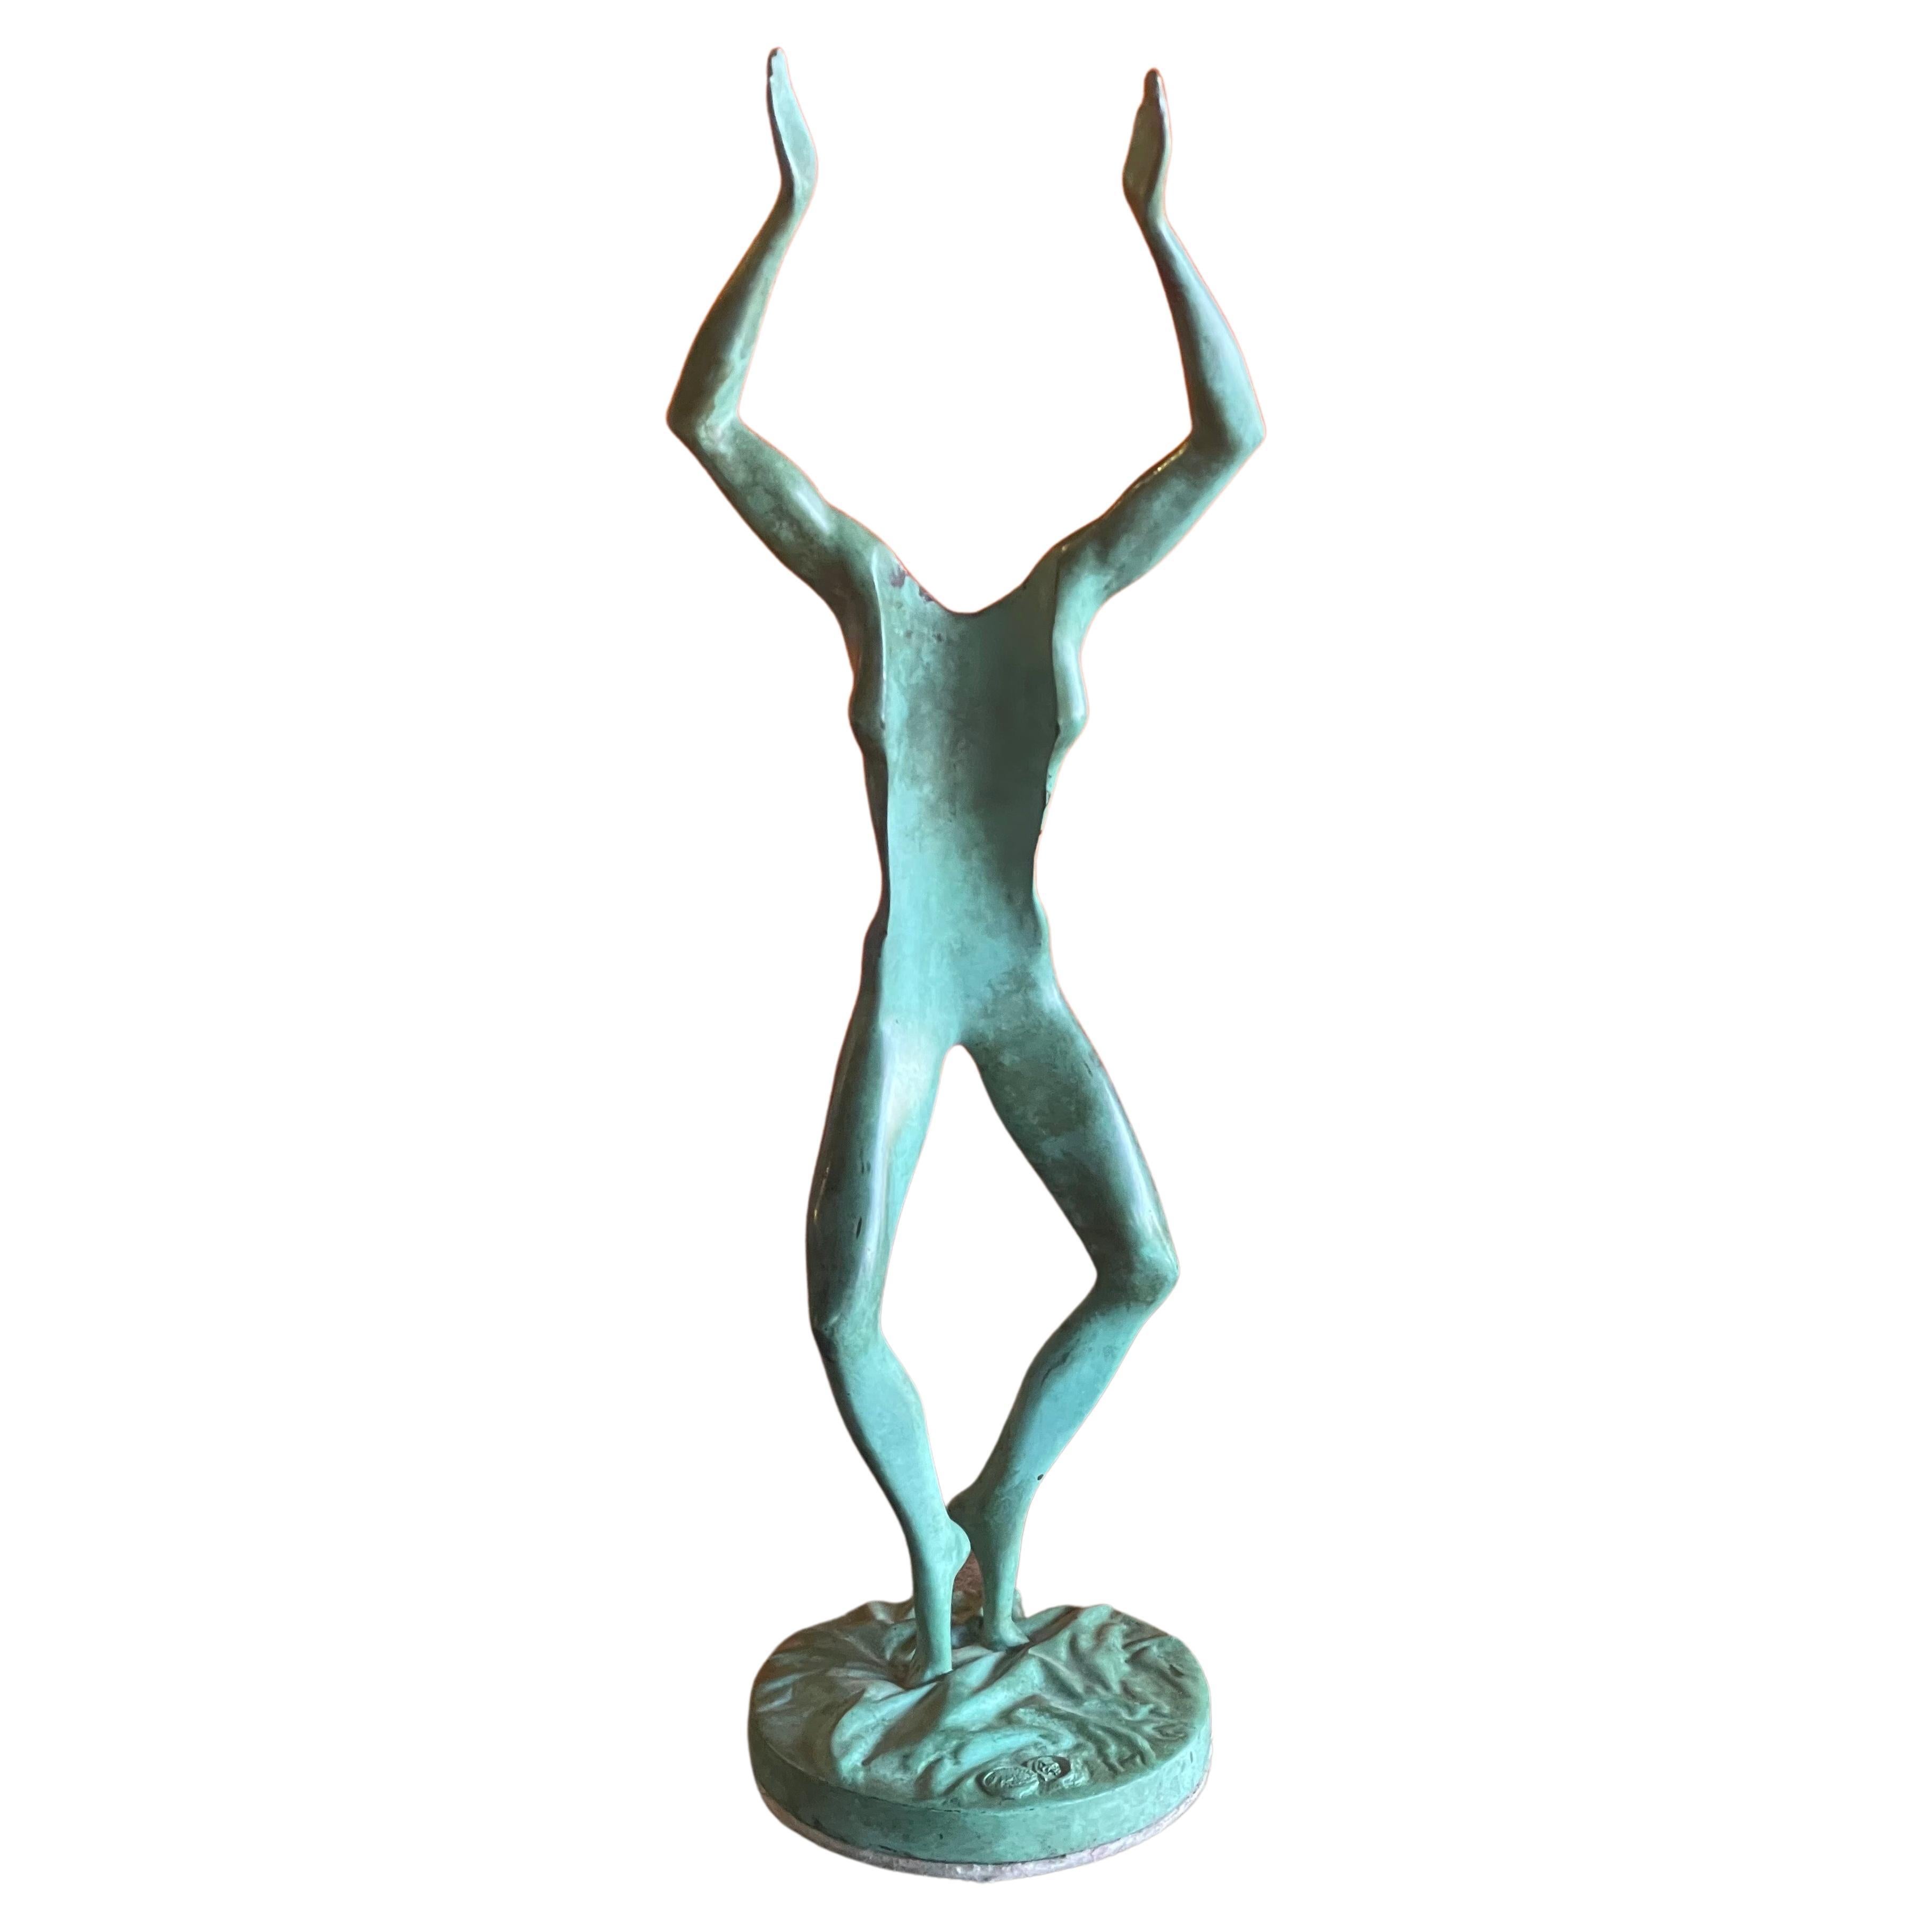 Patinated Verdigras Bronze Figurative Sculpture by Venturi Arte Bologna